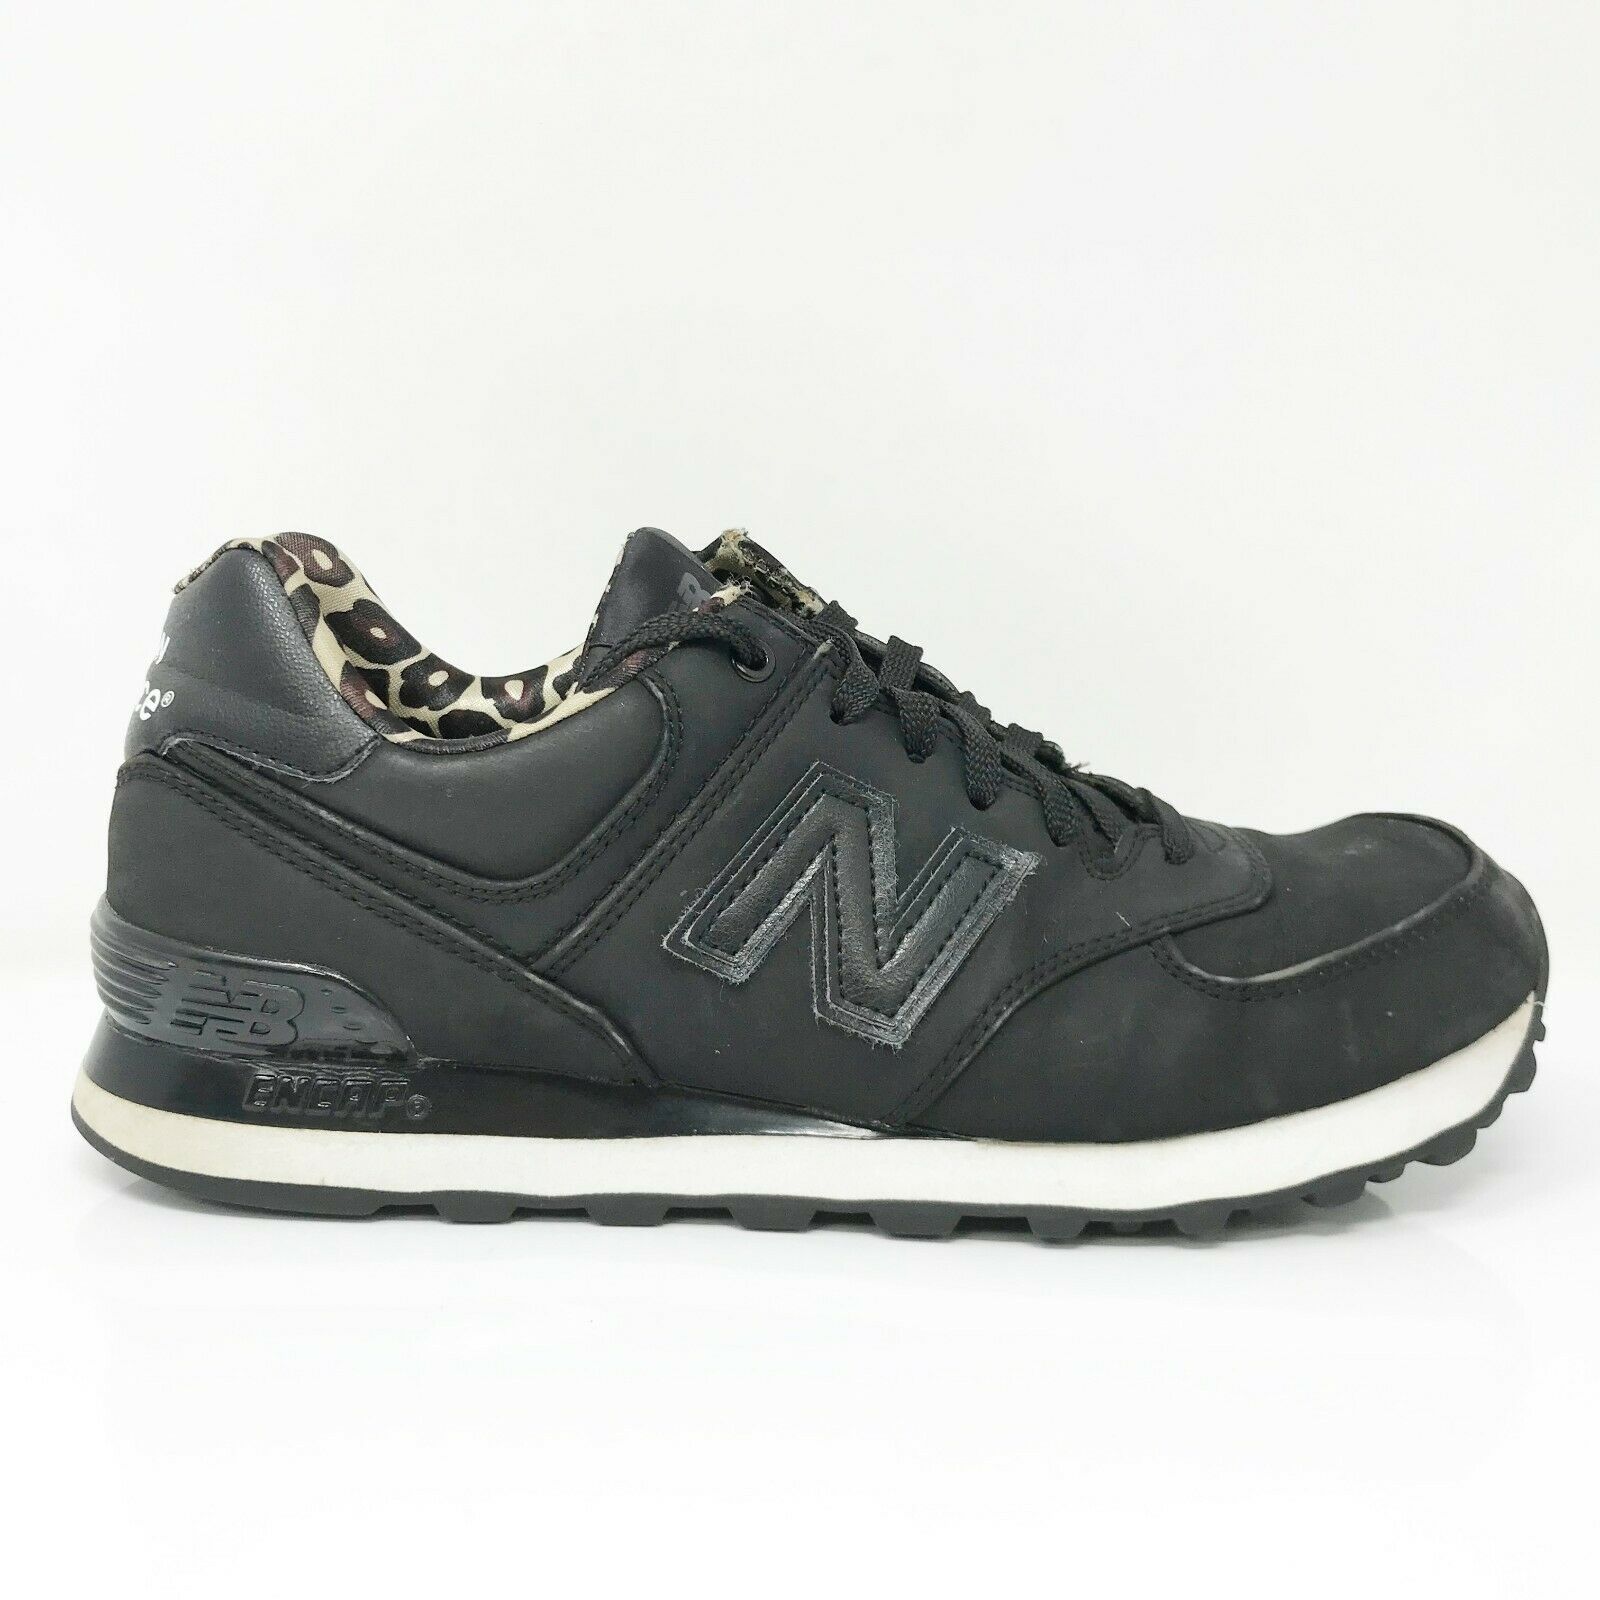 New Balance Womens 574 WL574SPK Black Running Shoes Sneakers Size 8.5 B